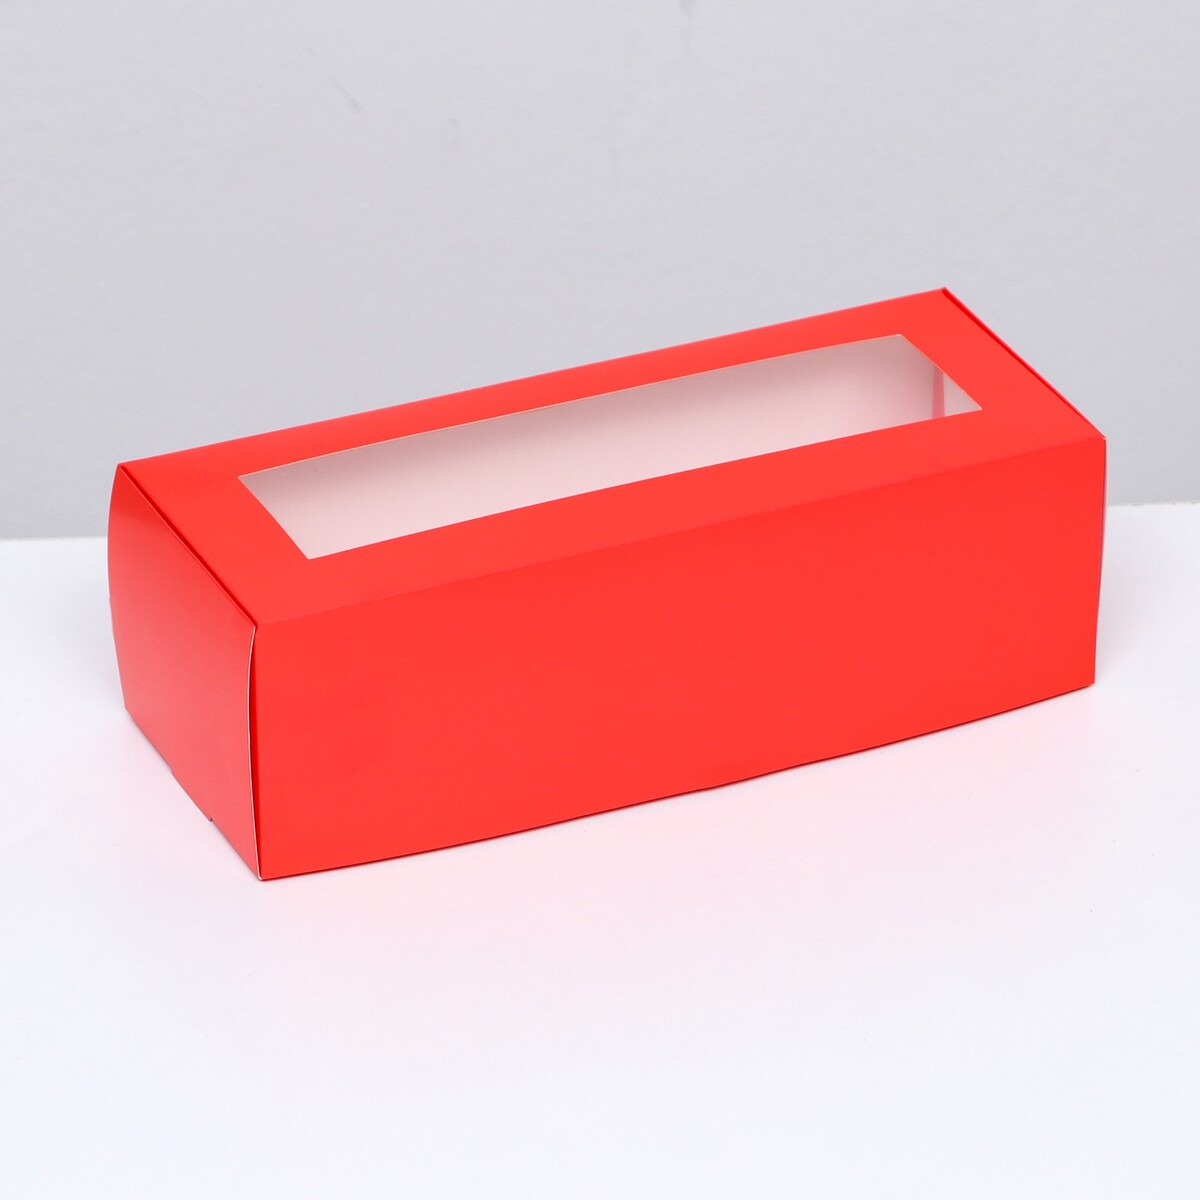 Коробка складная с окном под рулет, красная, 26 х 10 х 8 см коробка под рулет белая 16 5 х 11 х 9 см